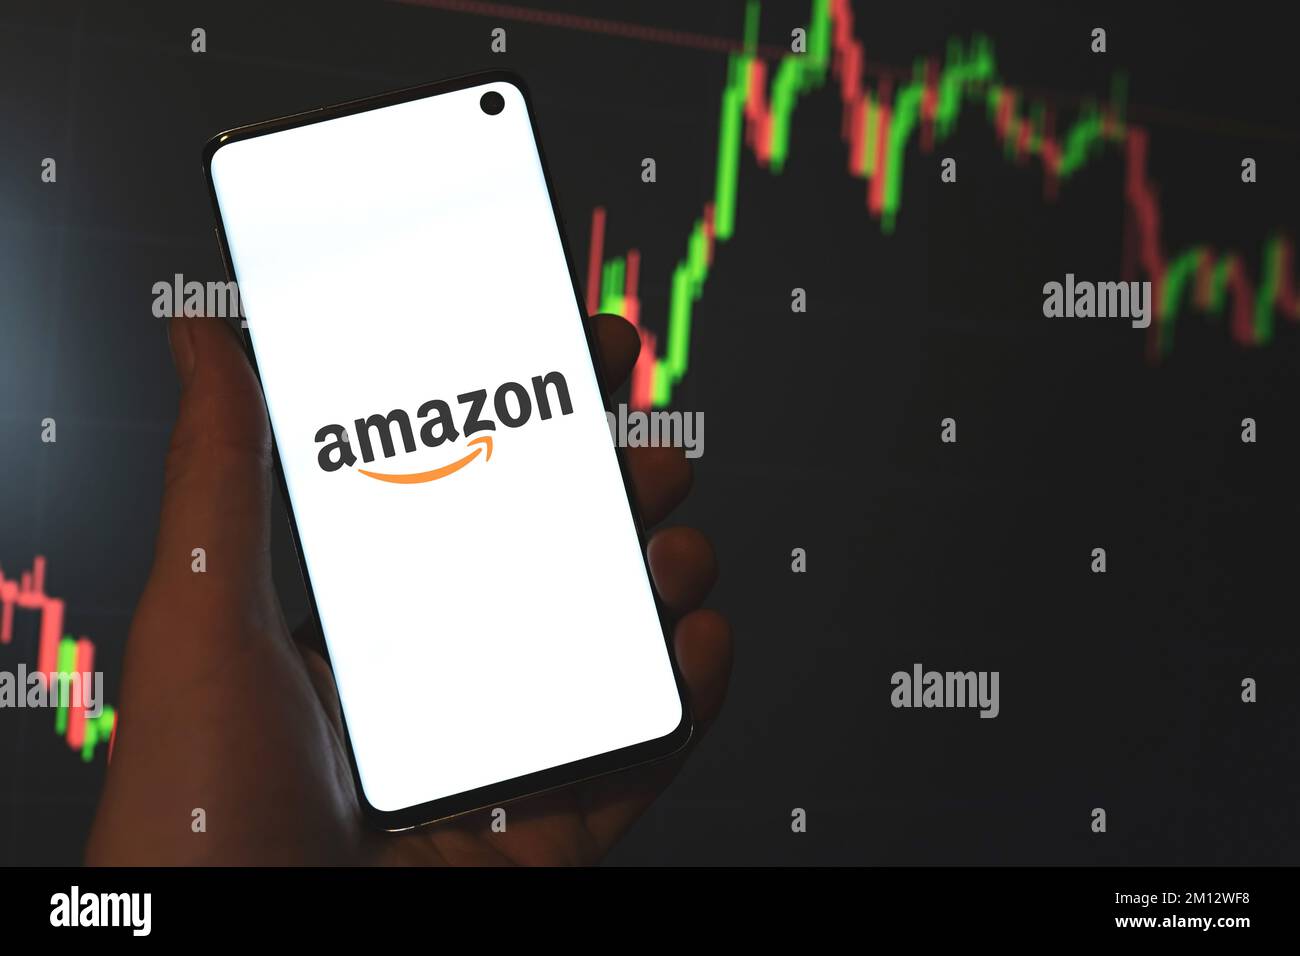 Amazon Inc. logo displayed on phone screen in hand, stock chart, line graph bar dark background. Swansea, UK - August 26, 2021. Stock Photo